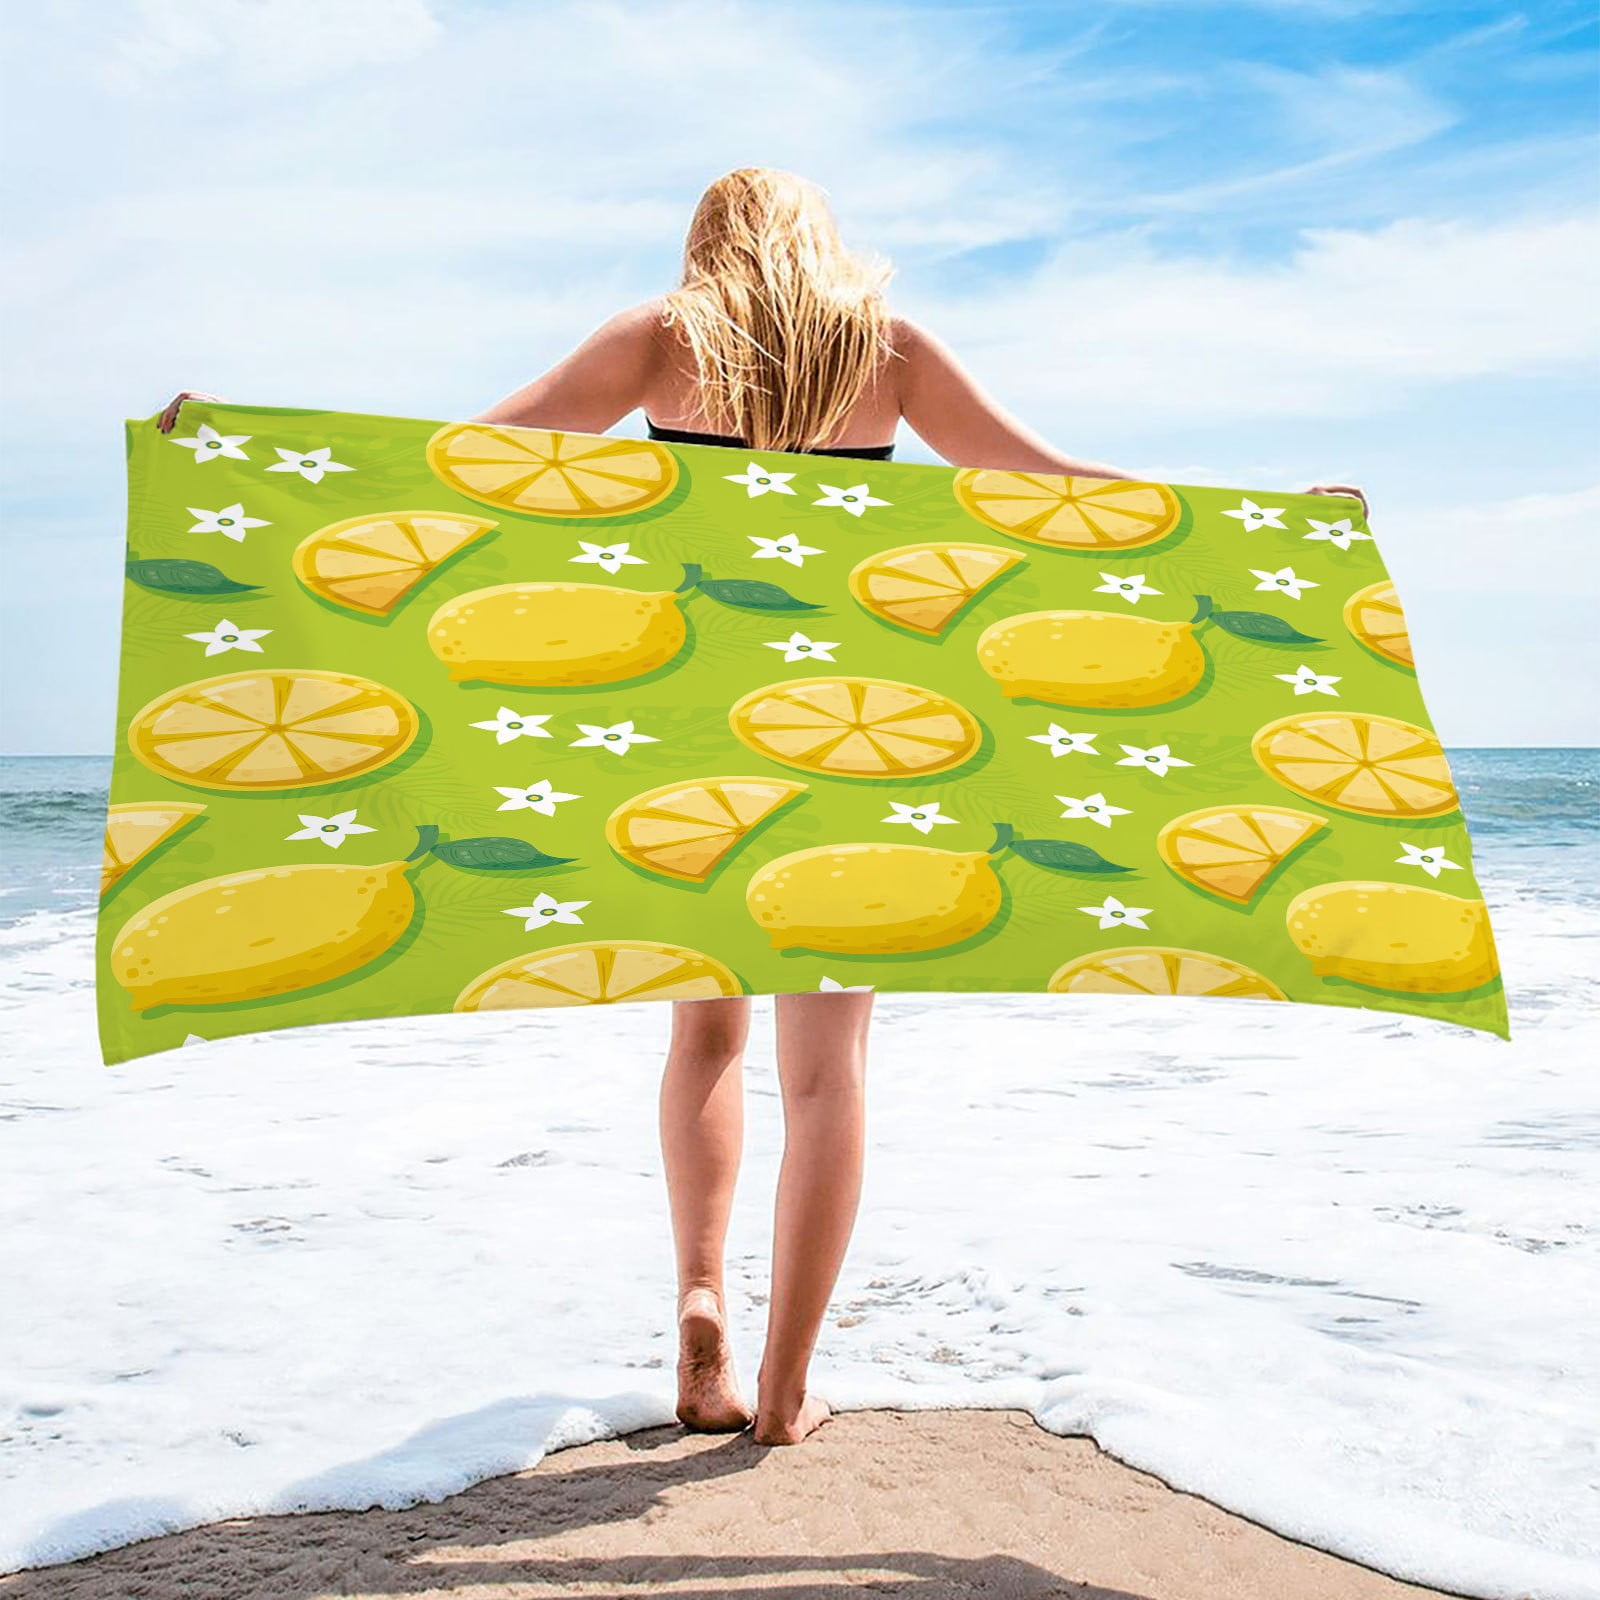 30x60 Lightweight Economy Cabana Beach Towels. 11 Lb per Dz